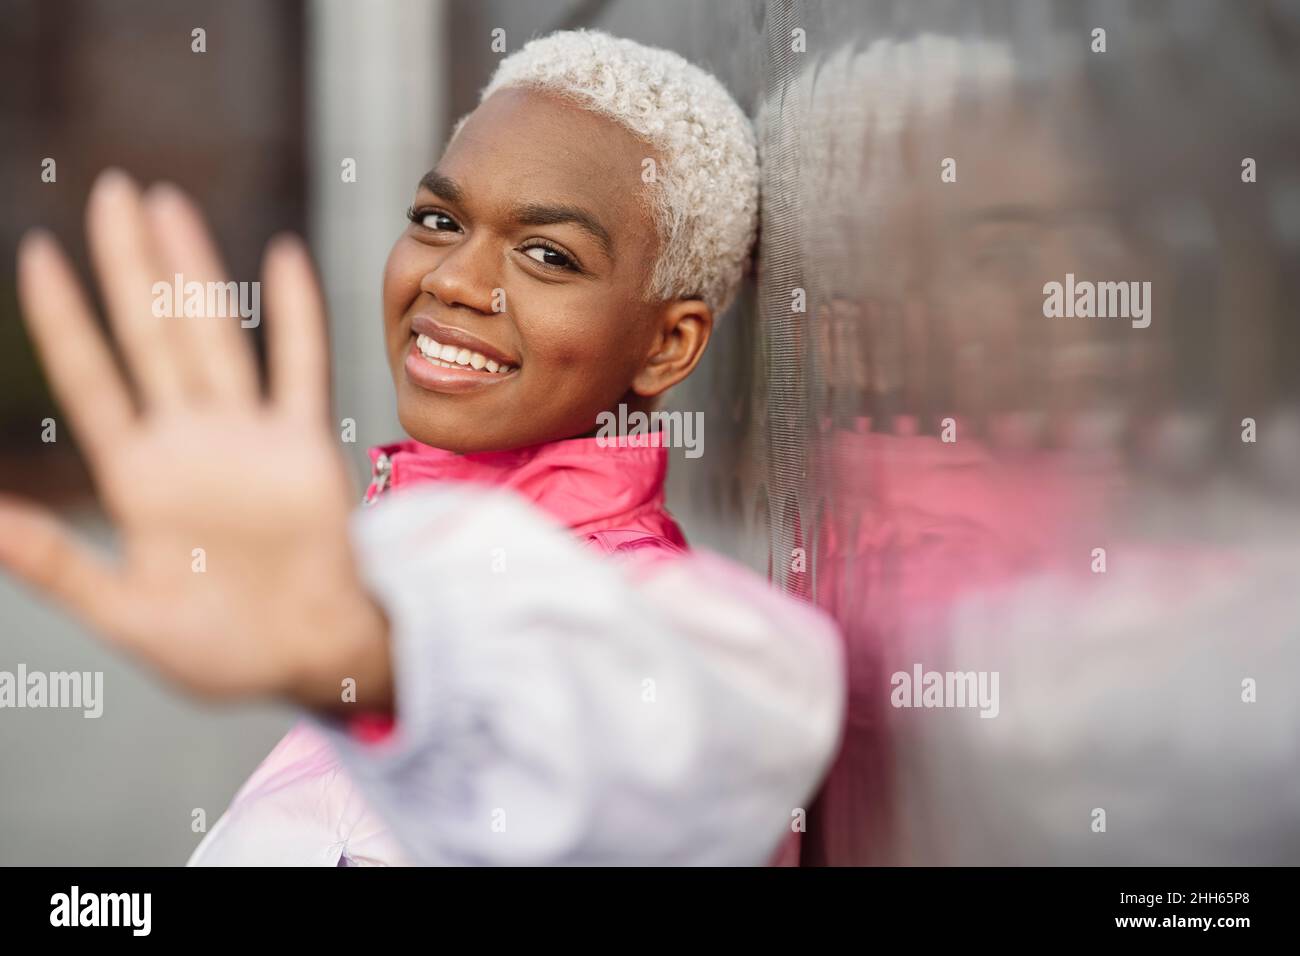 Lächelnde junge Frau gestikuliert Stop-Schild an der Wand gelehnt Stockfoto